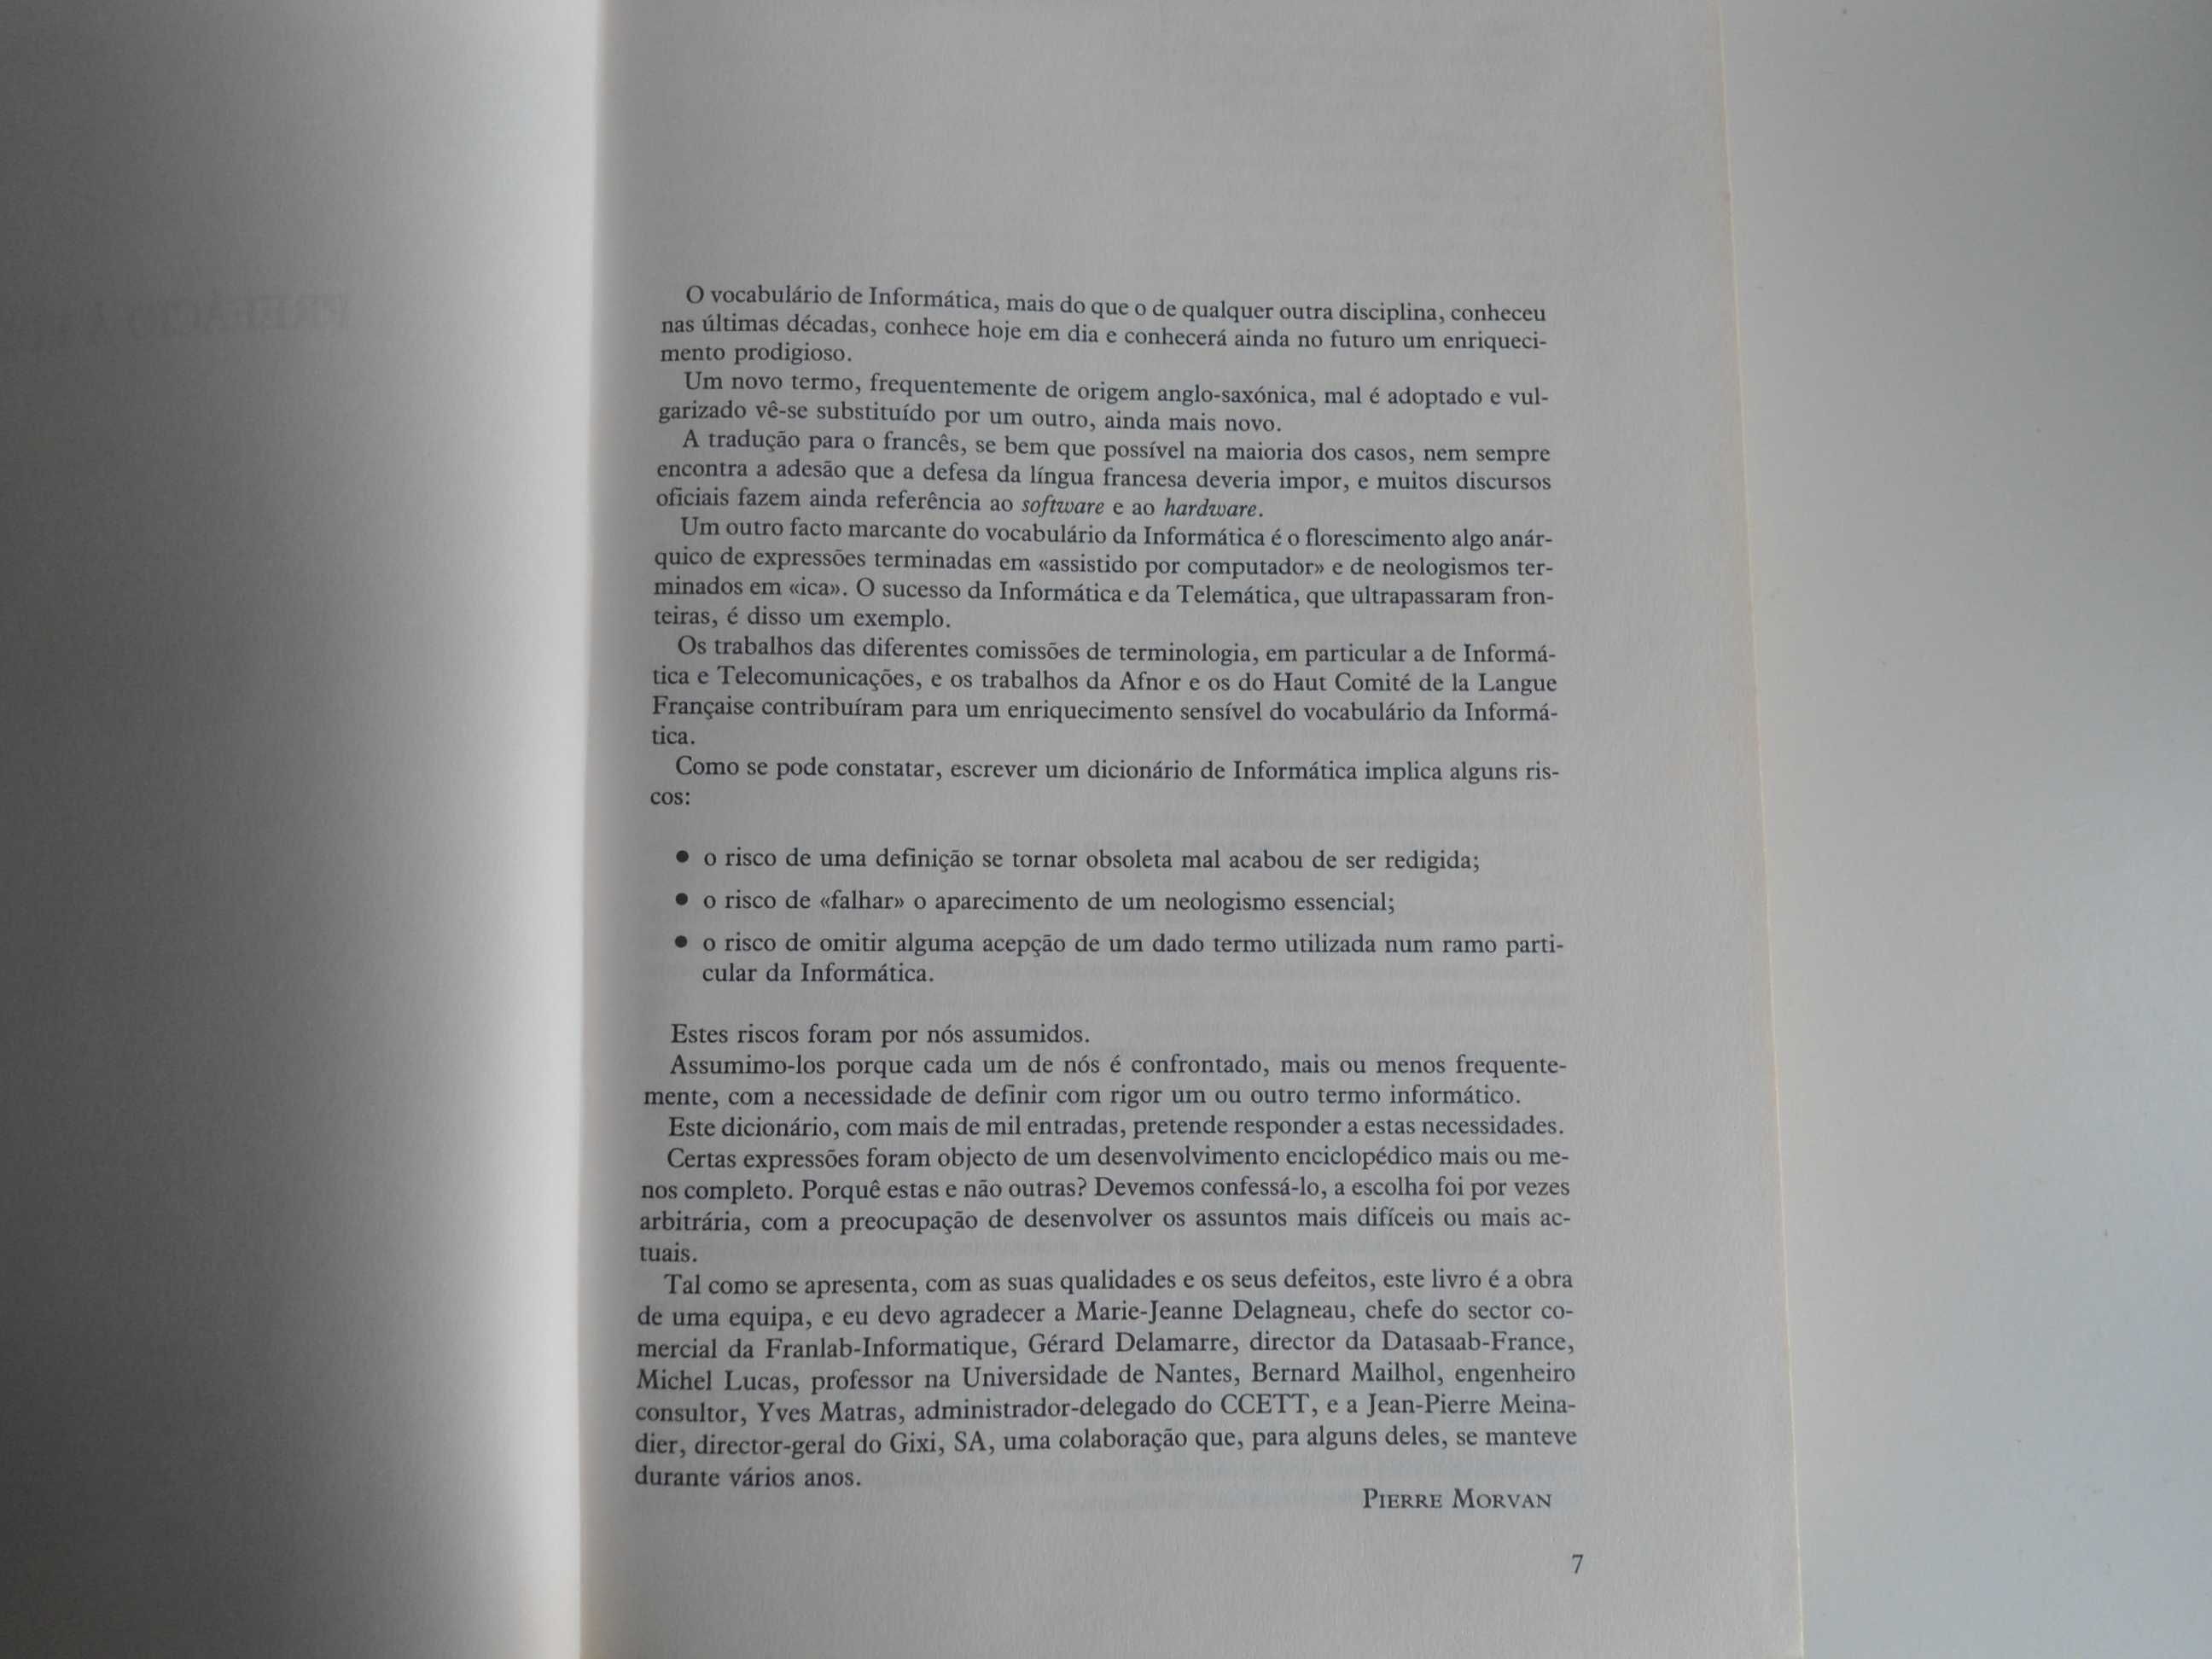 Dicionário de Informática por Pierre Morvan